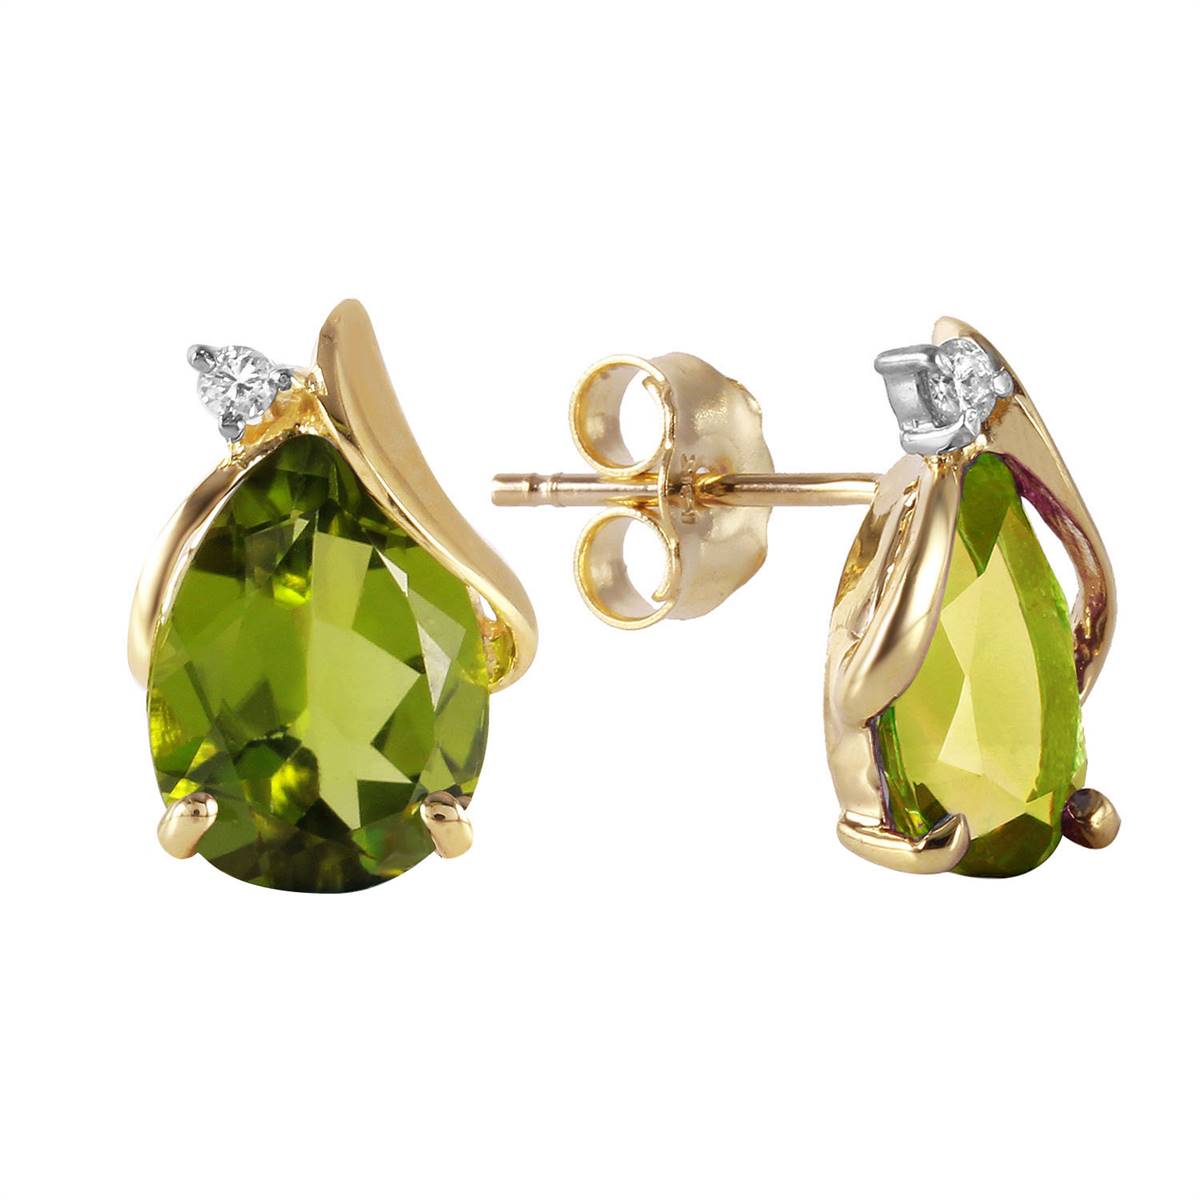 4.26 Carat 14K Solid Yellow Gold Stud Earrings Diamond Peridot Jewelry